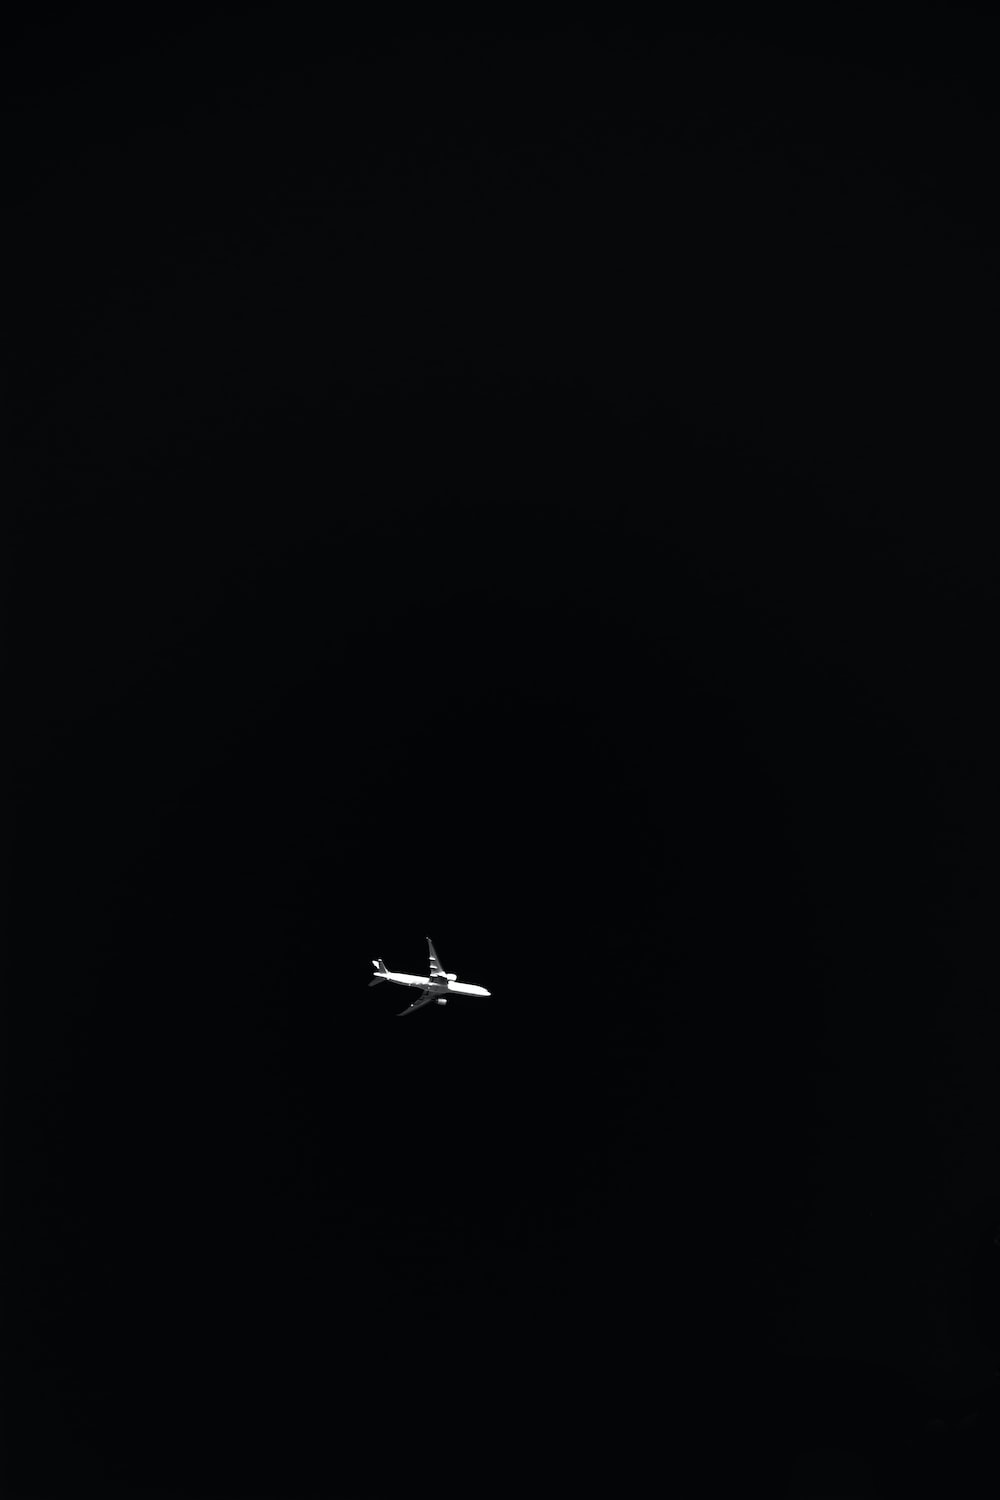 1K+ Dark Plane Picture. Download Free Image